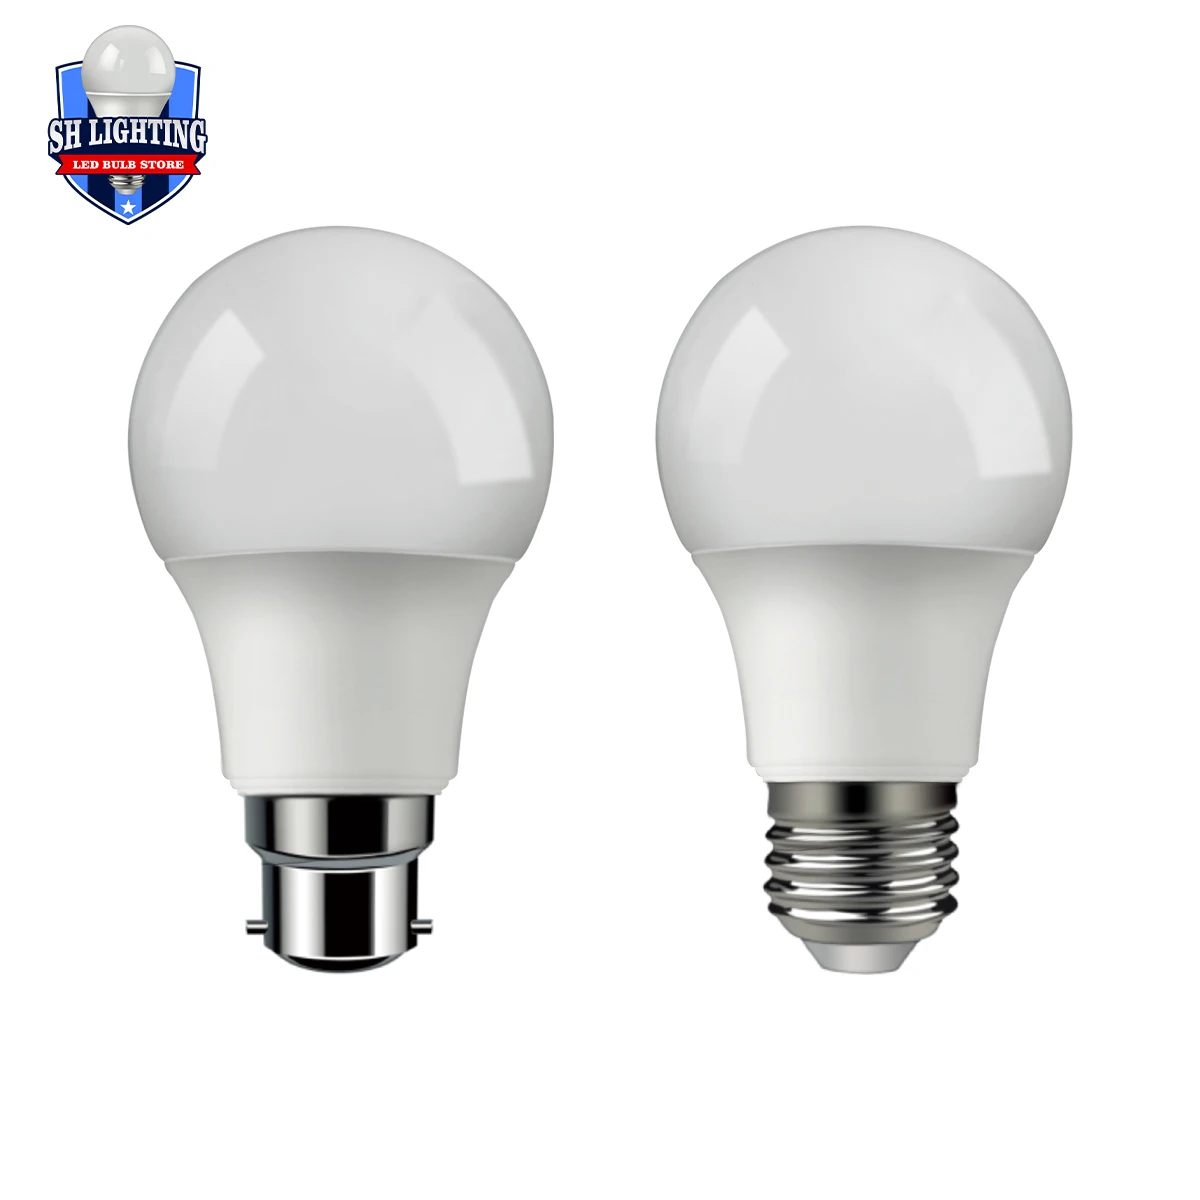 

1 Pcs High Brightness Led Bulb A60 9w E27 220v-240v 3000k Warm White Bombilla For Home, Equivalent To 60w Halogen Light